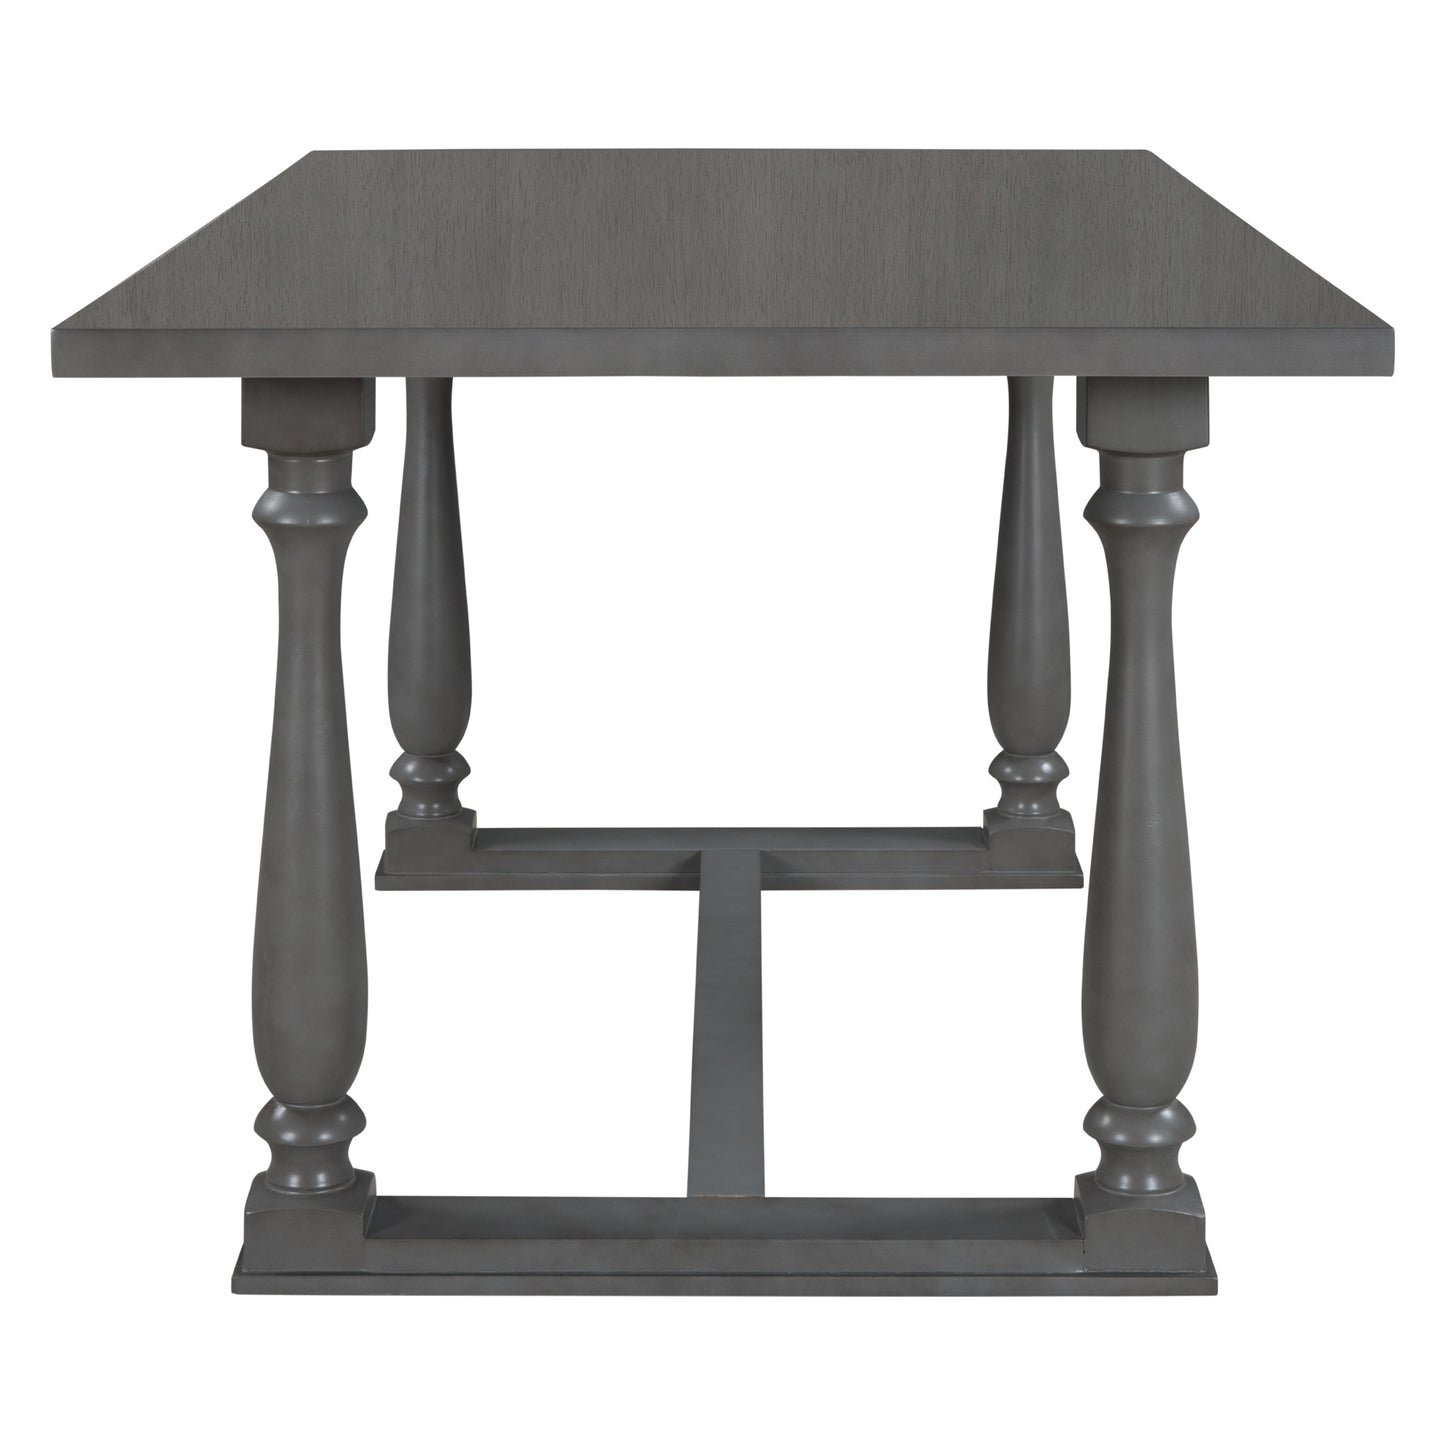 Mela 6-Piece Dining Table (gray)